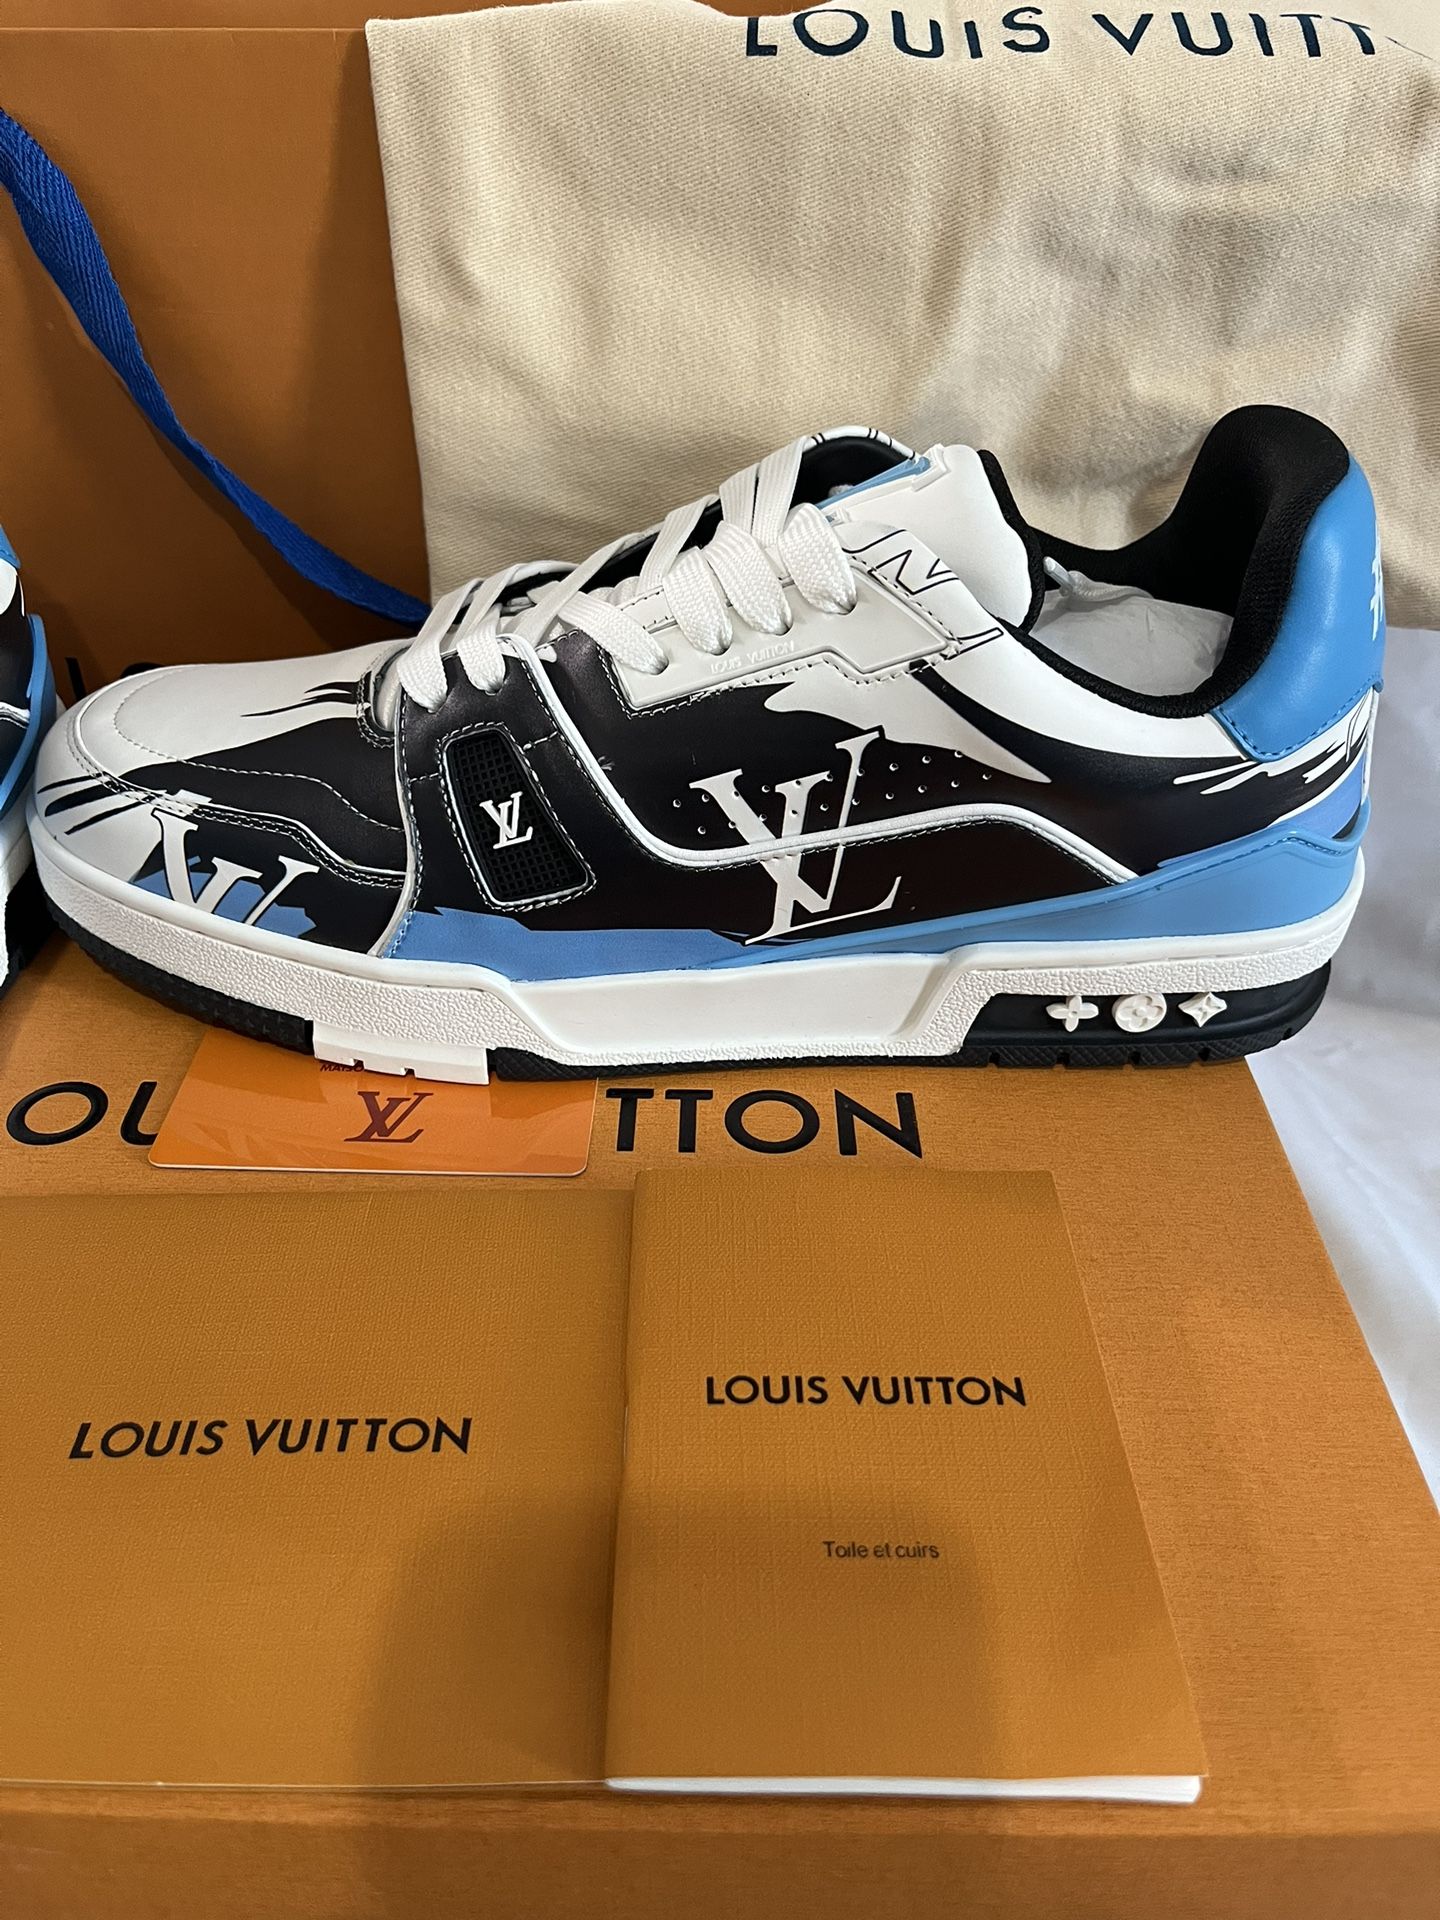 New Authentic Louis Vuitton Trainer #54 Graphic Print Blue/White